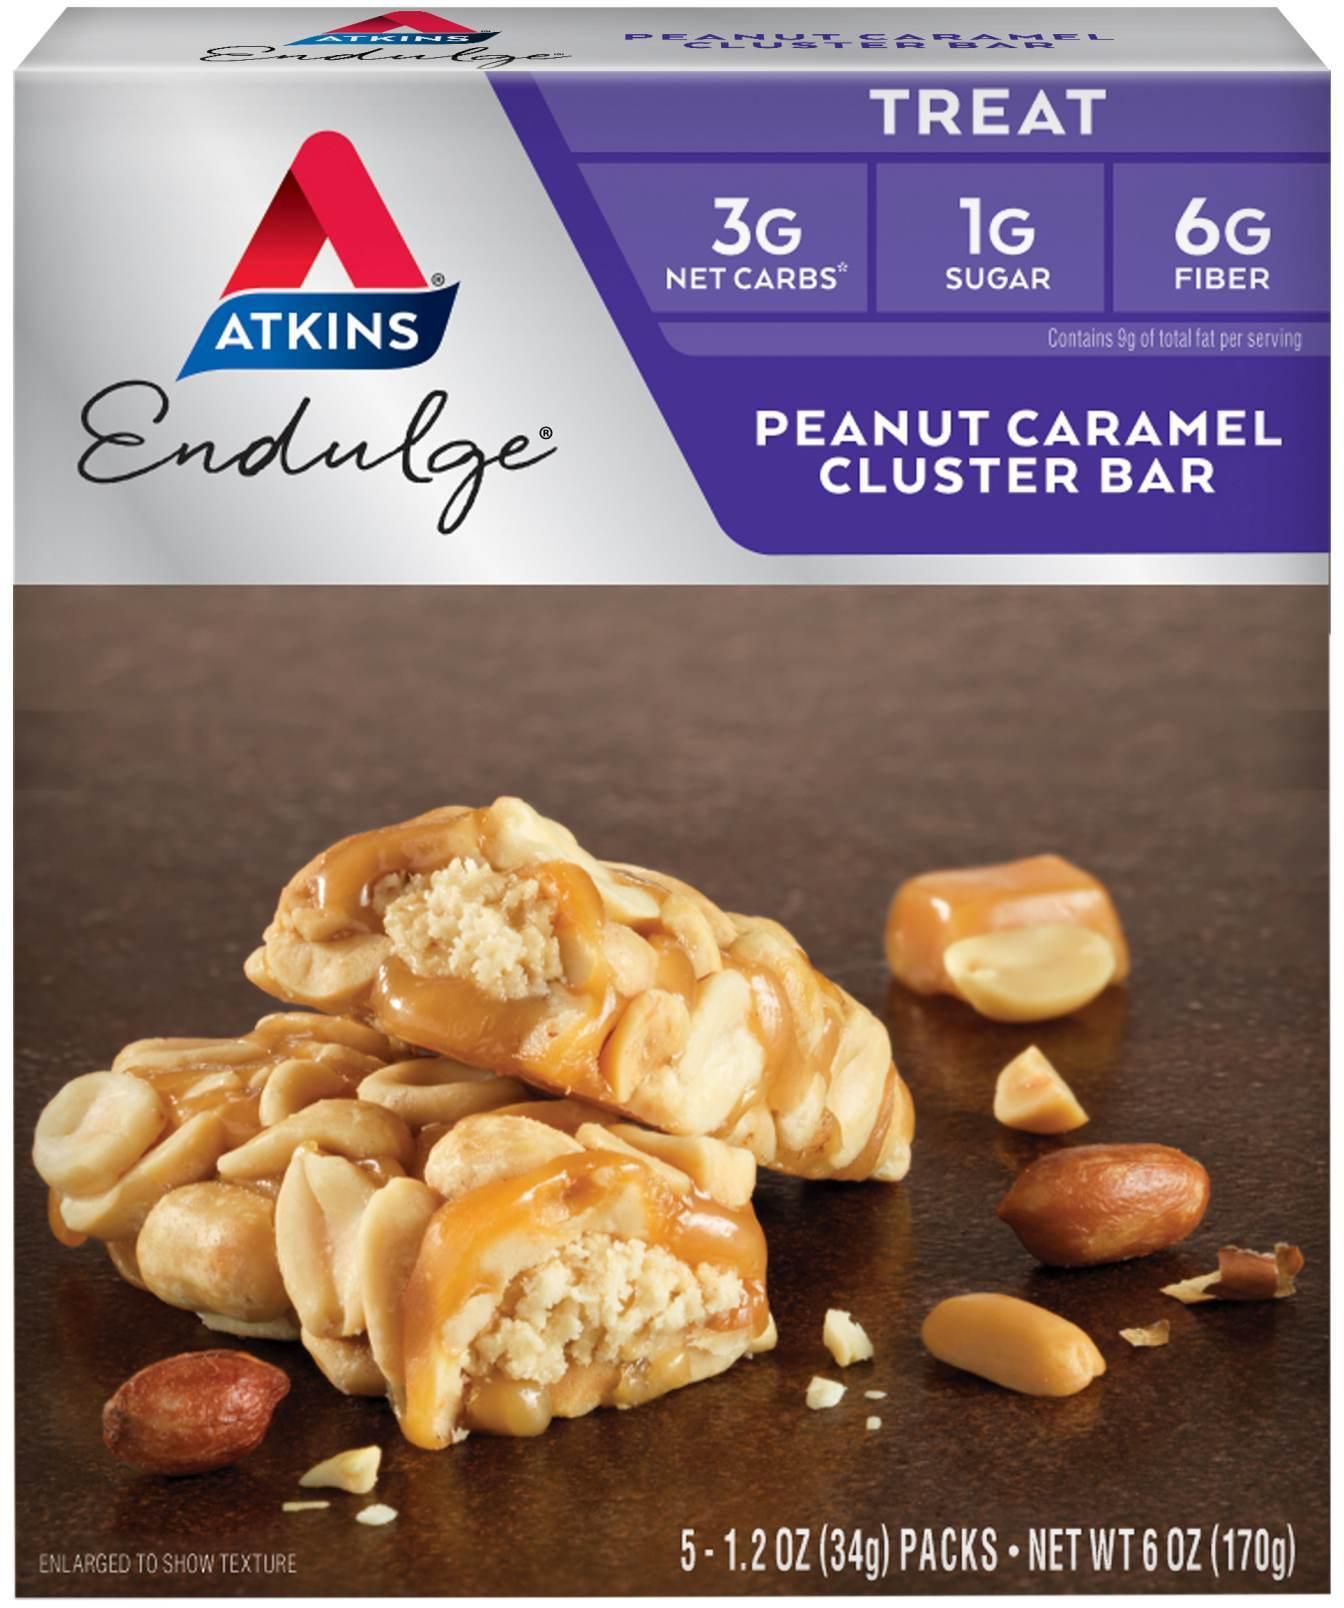 Atkins Endulge Treat Peanut Caramel Cluster Bar 34g